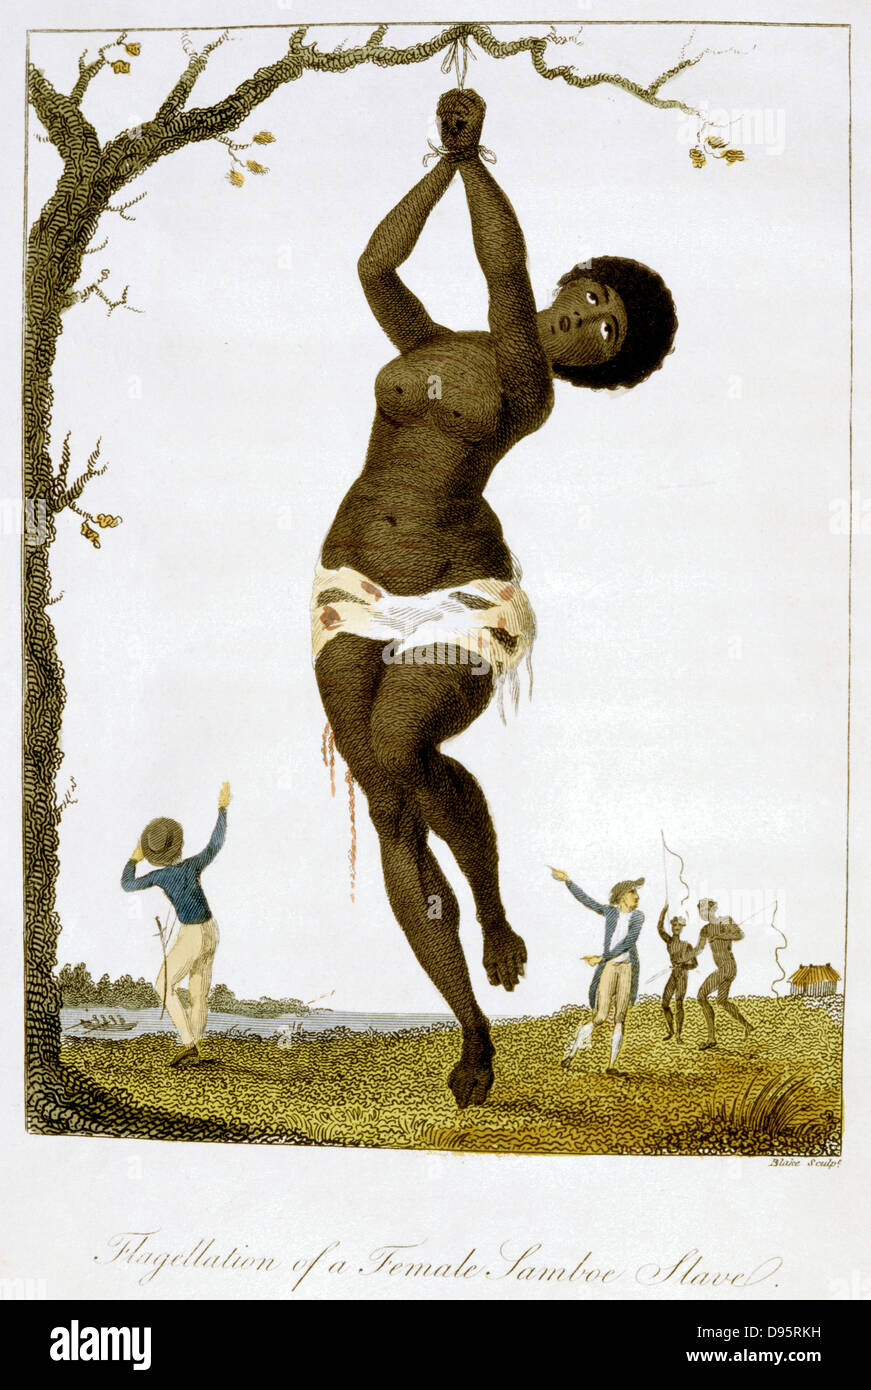 https://c8.alamy.com/comp/D95RKH/whipping-of-a-female-black-slave-from-stedman-journal-of-five-years-D95RKH.jpg